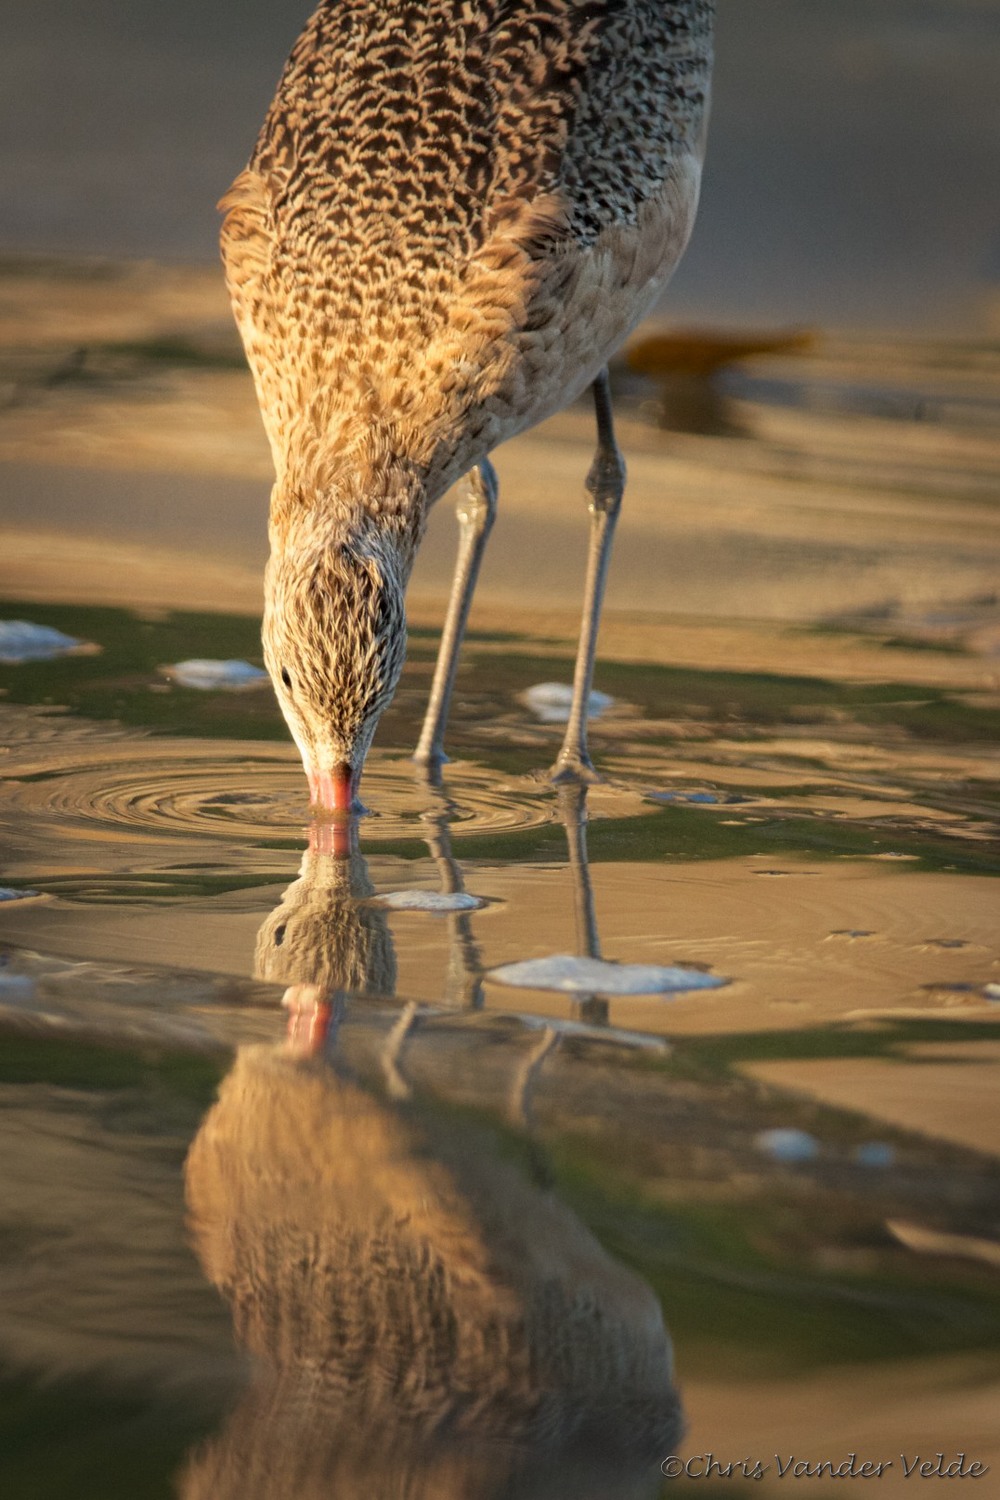 ChrisVanderVeldecvv-sunrise-shorebirds-reflection.jpg